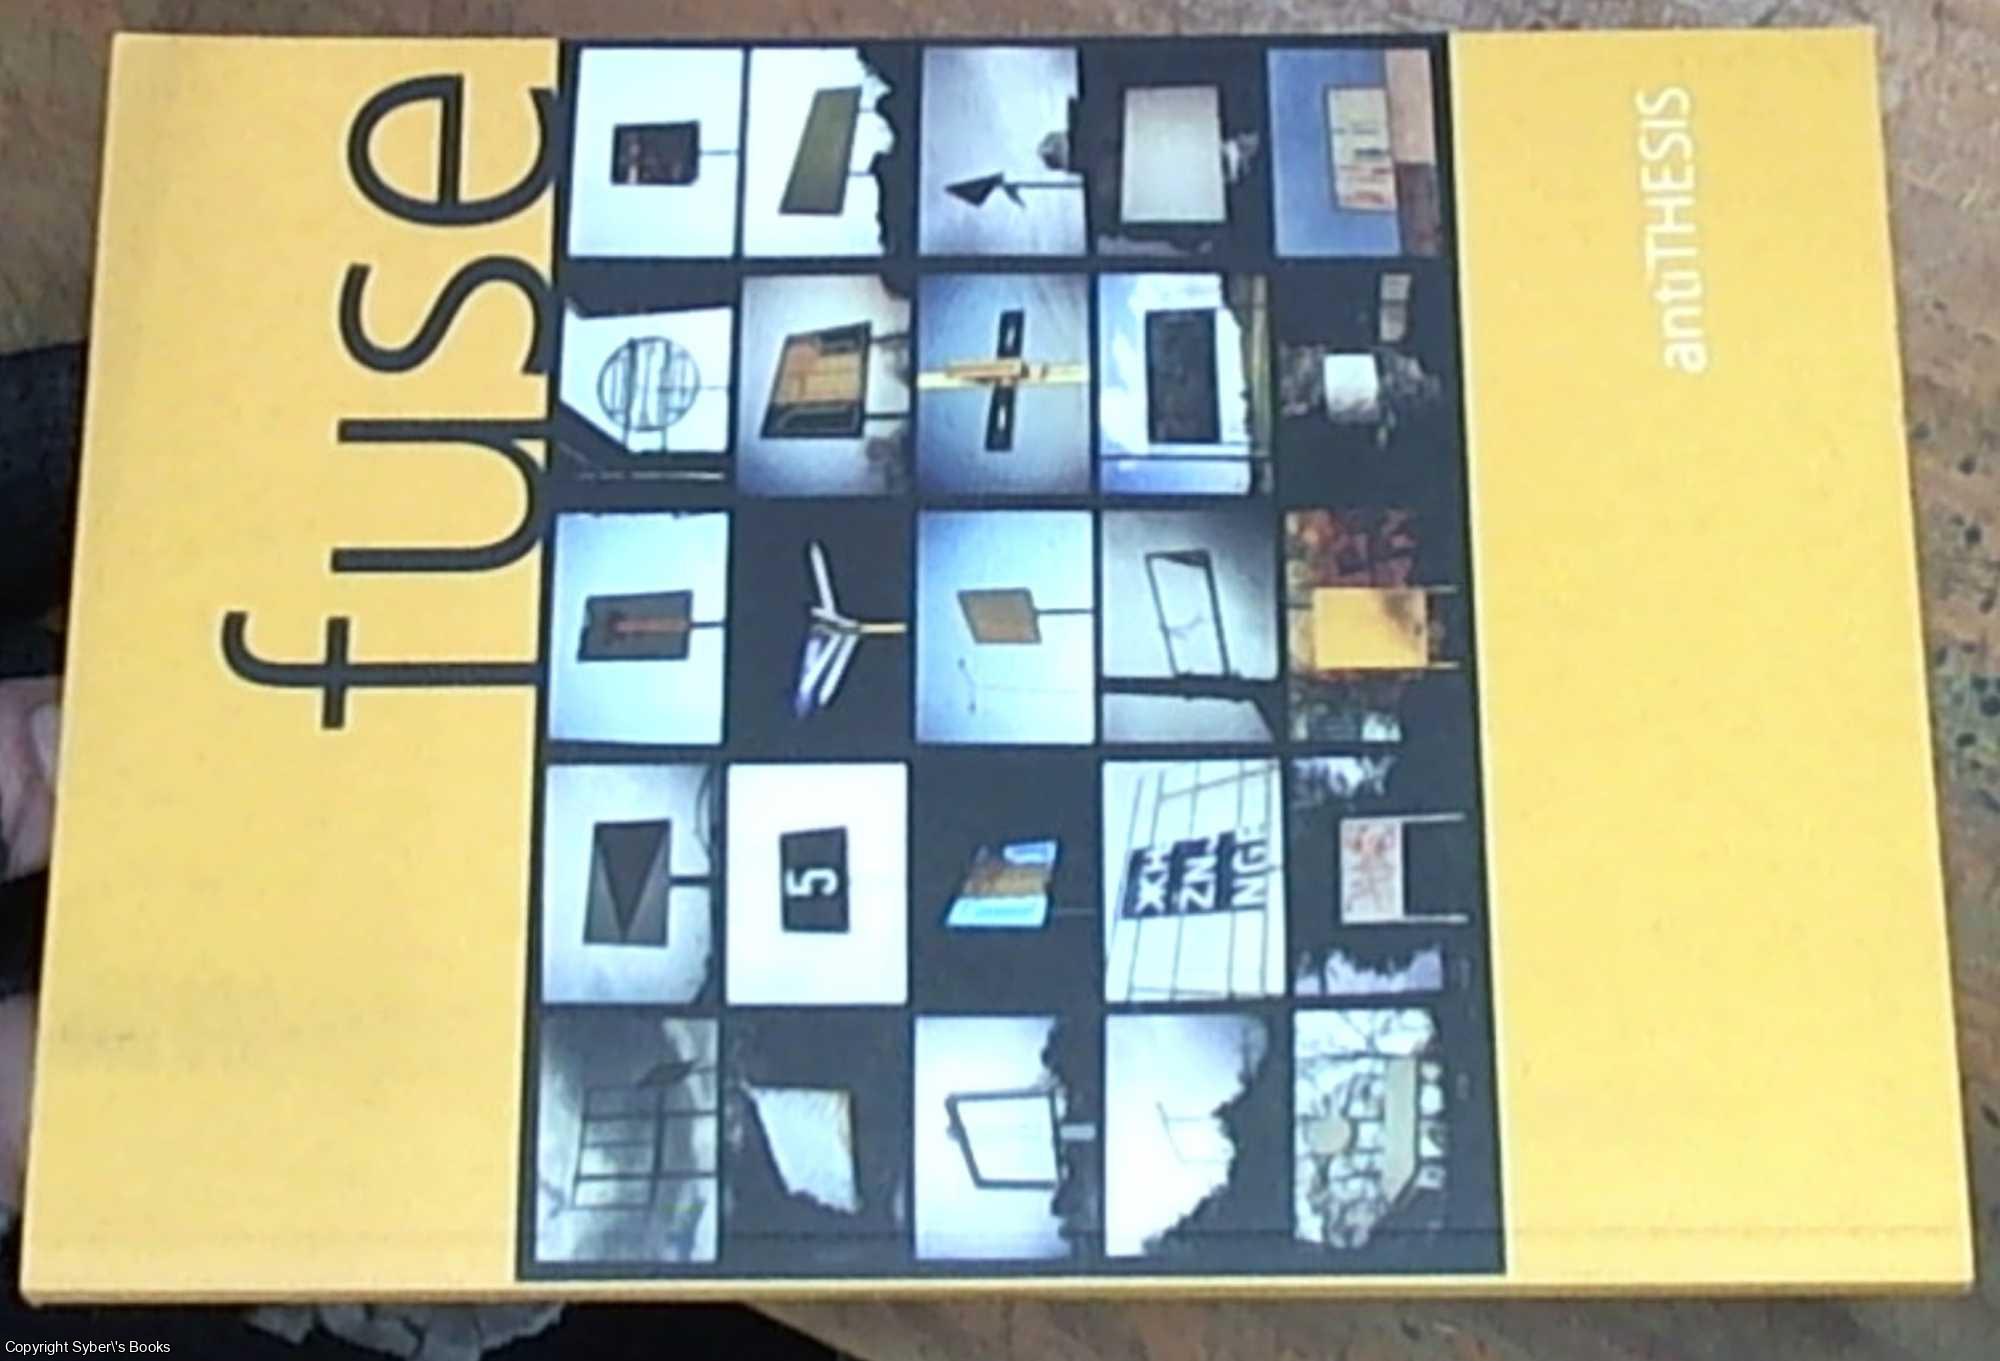 Murray, Alex & Chan, Queenie  editors - antithesis volume 14  2004  Fuse